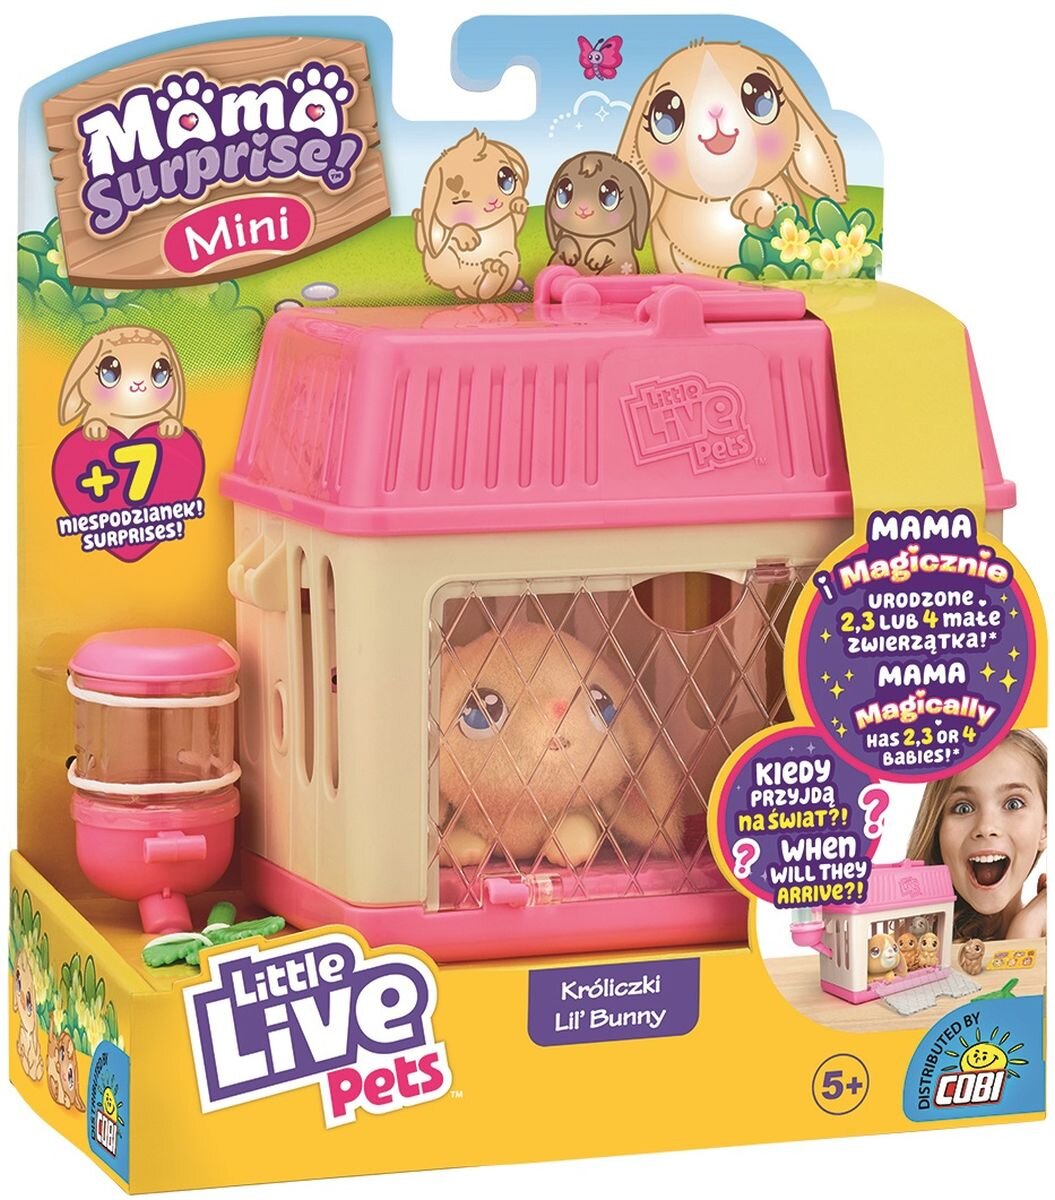 Little Live Pets 26510 Mama surprise! mini Myszki Cobi - Ceny i opinie na